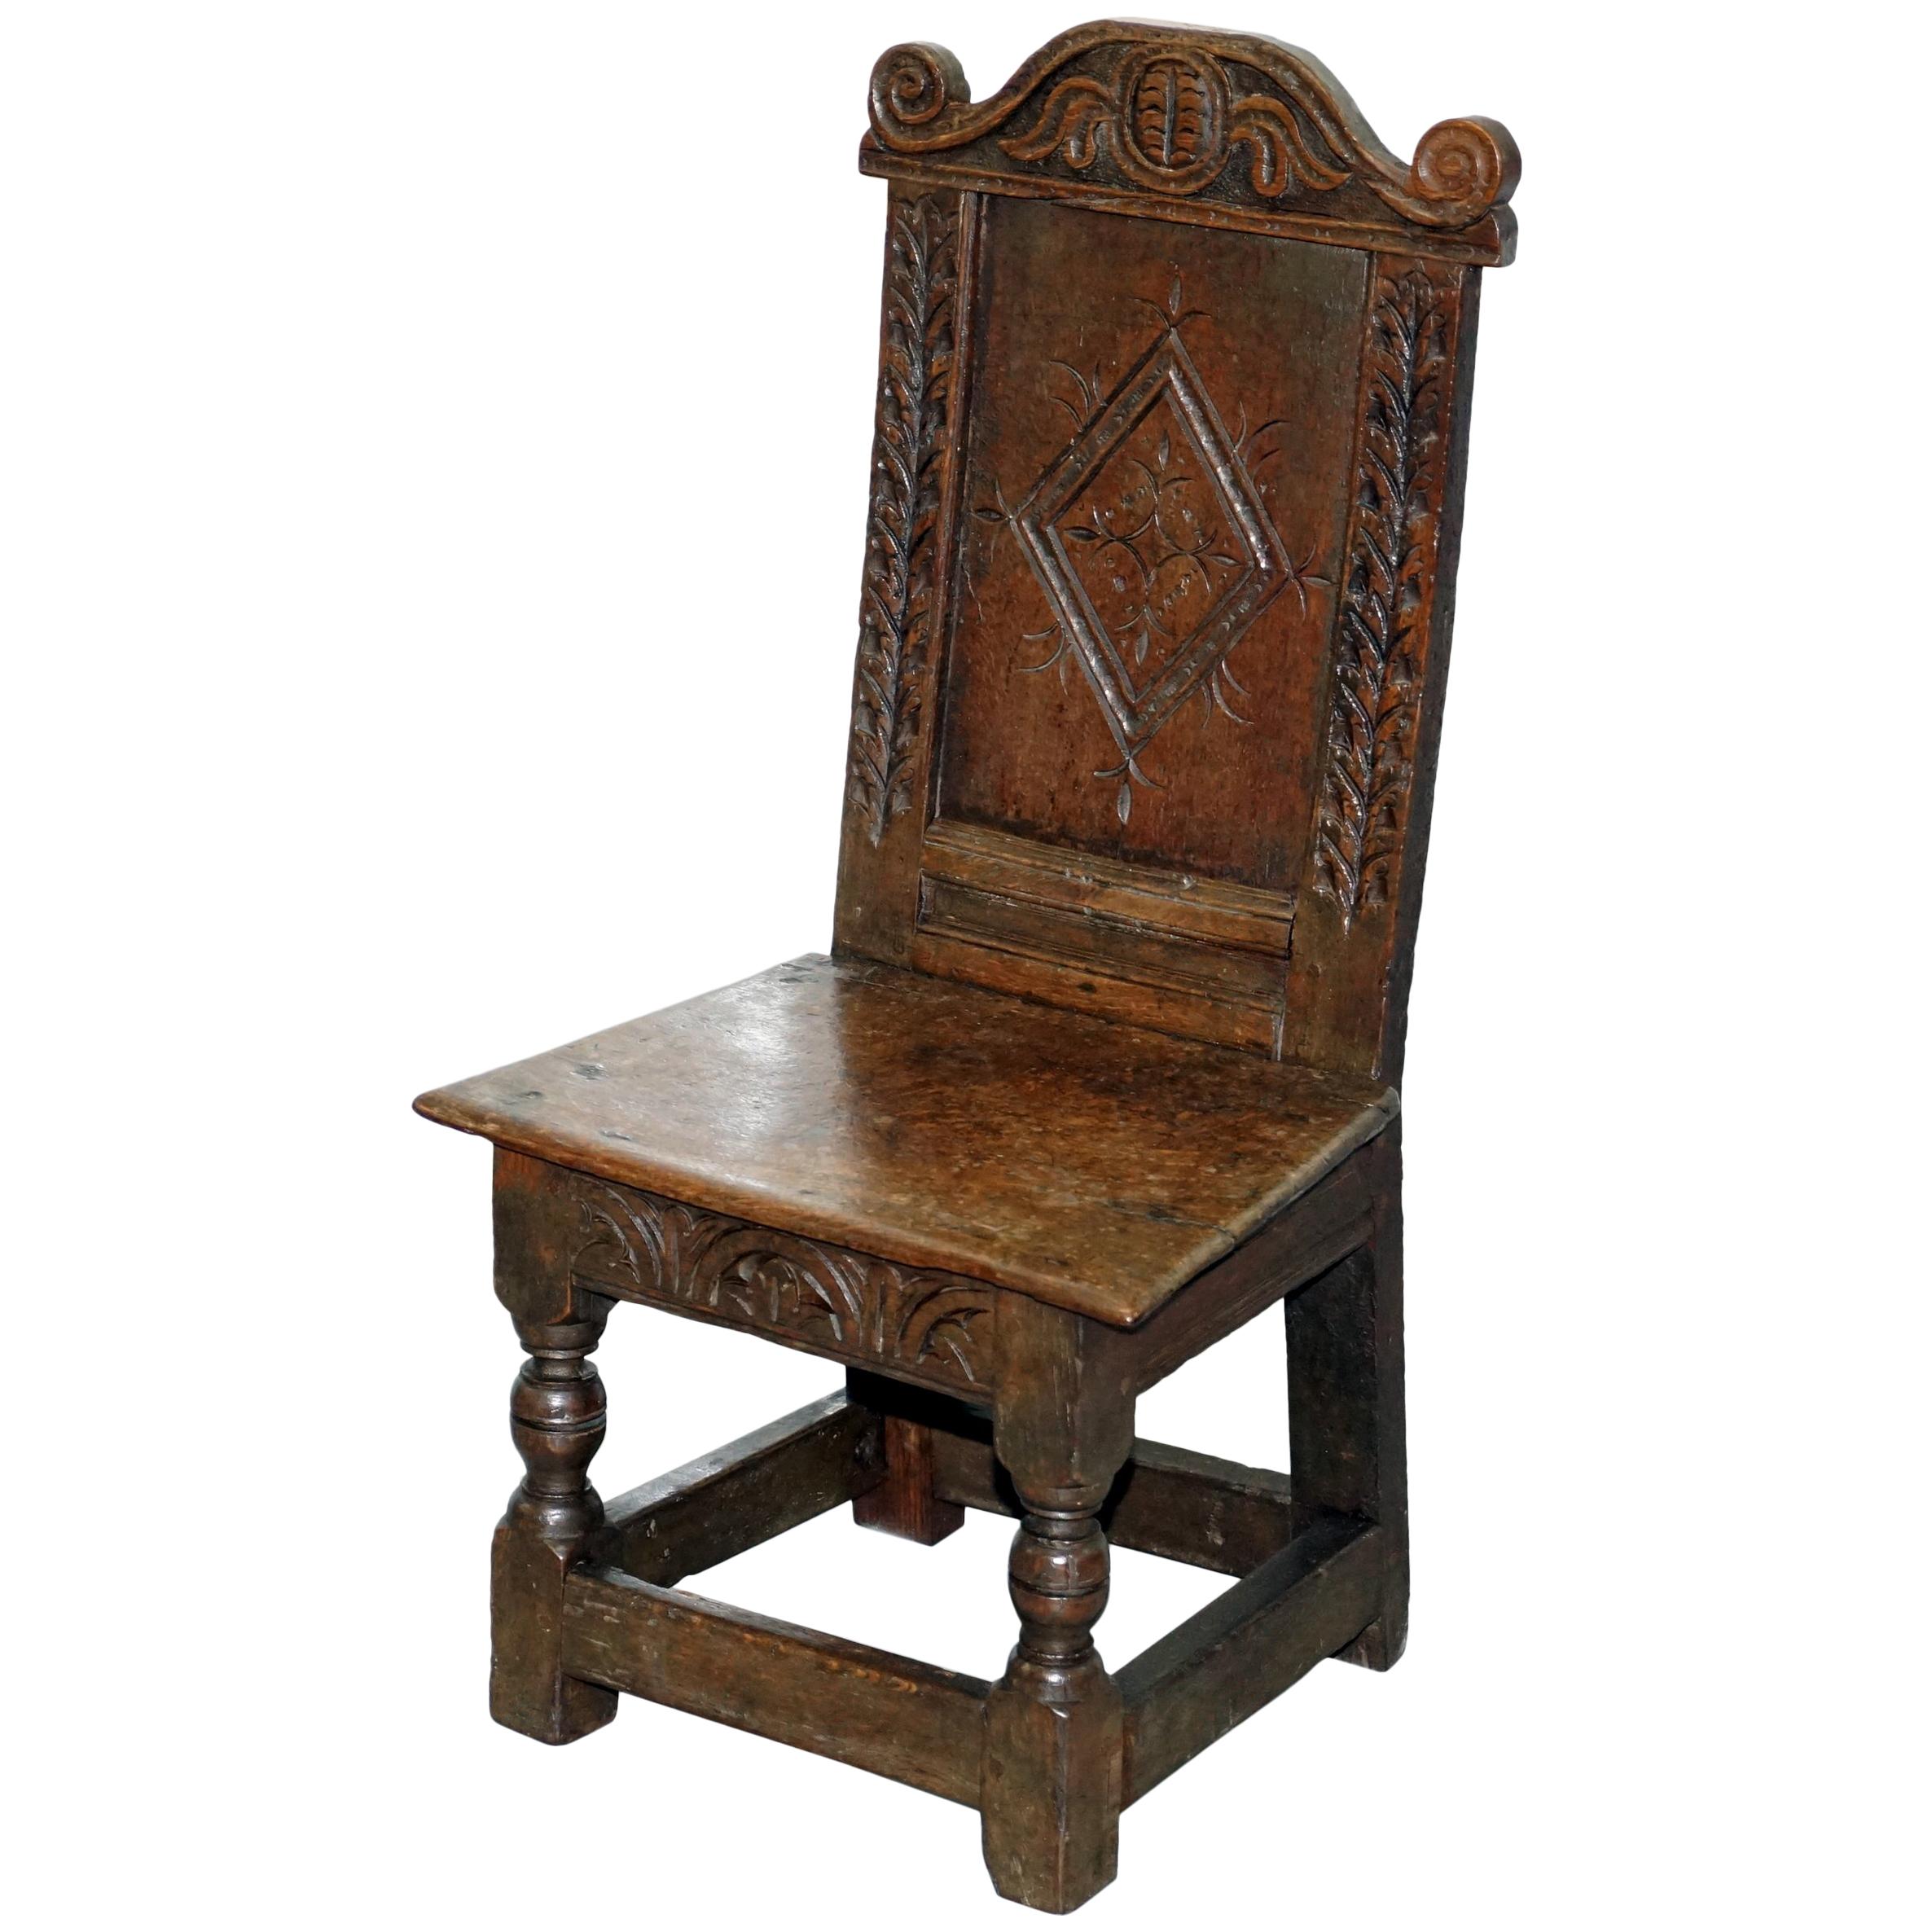 Rare circa 1760 Fruit Wood Wood Chair Nicely Carved Quite Small 18th Century Example (Chaise en bois fruitier joliment sculptée) en vente